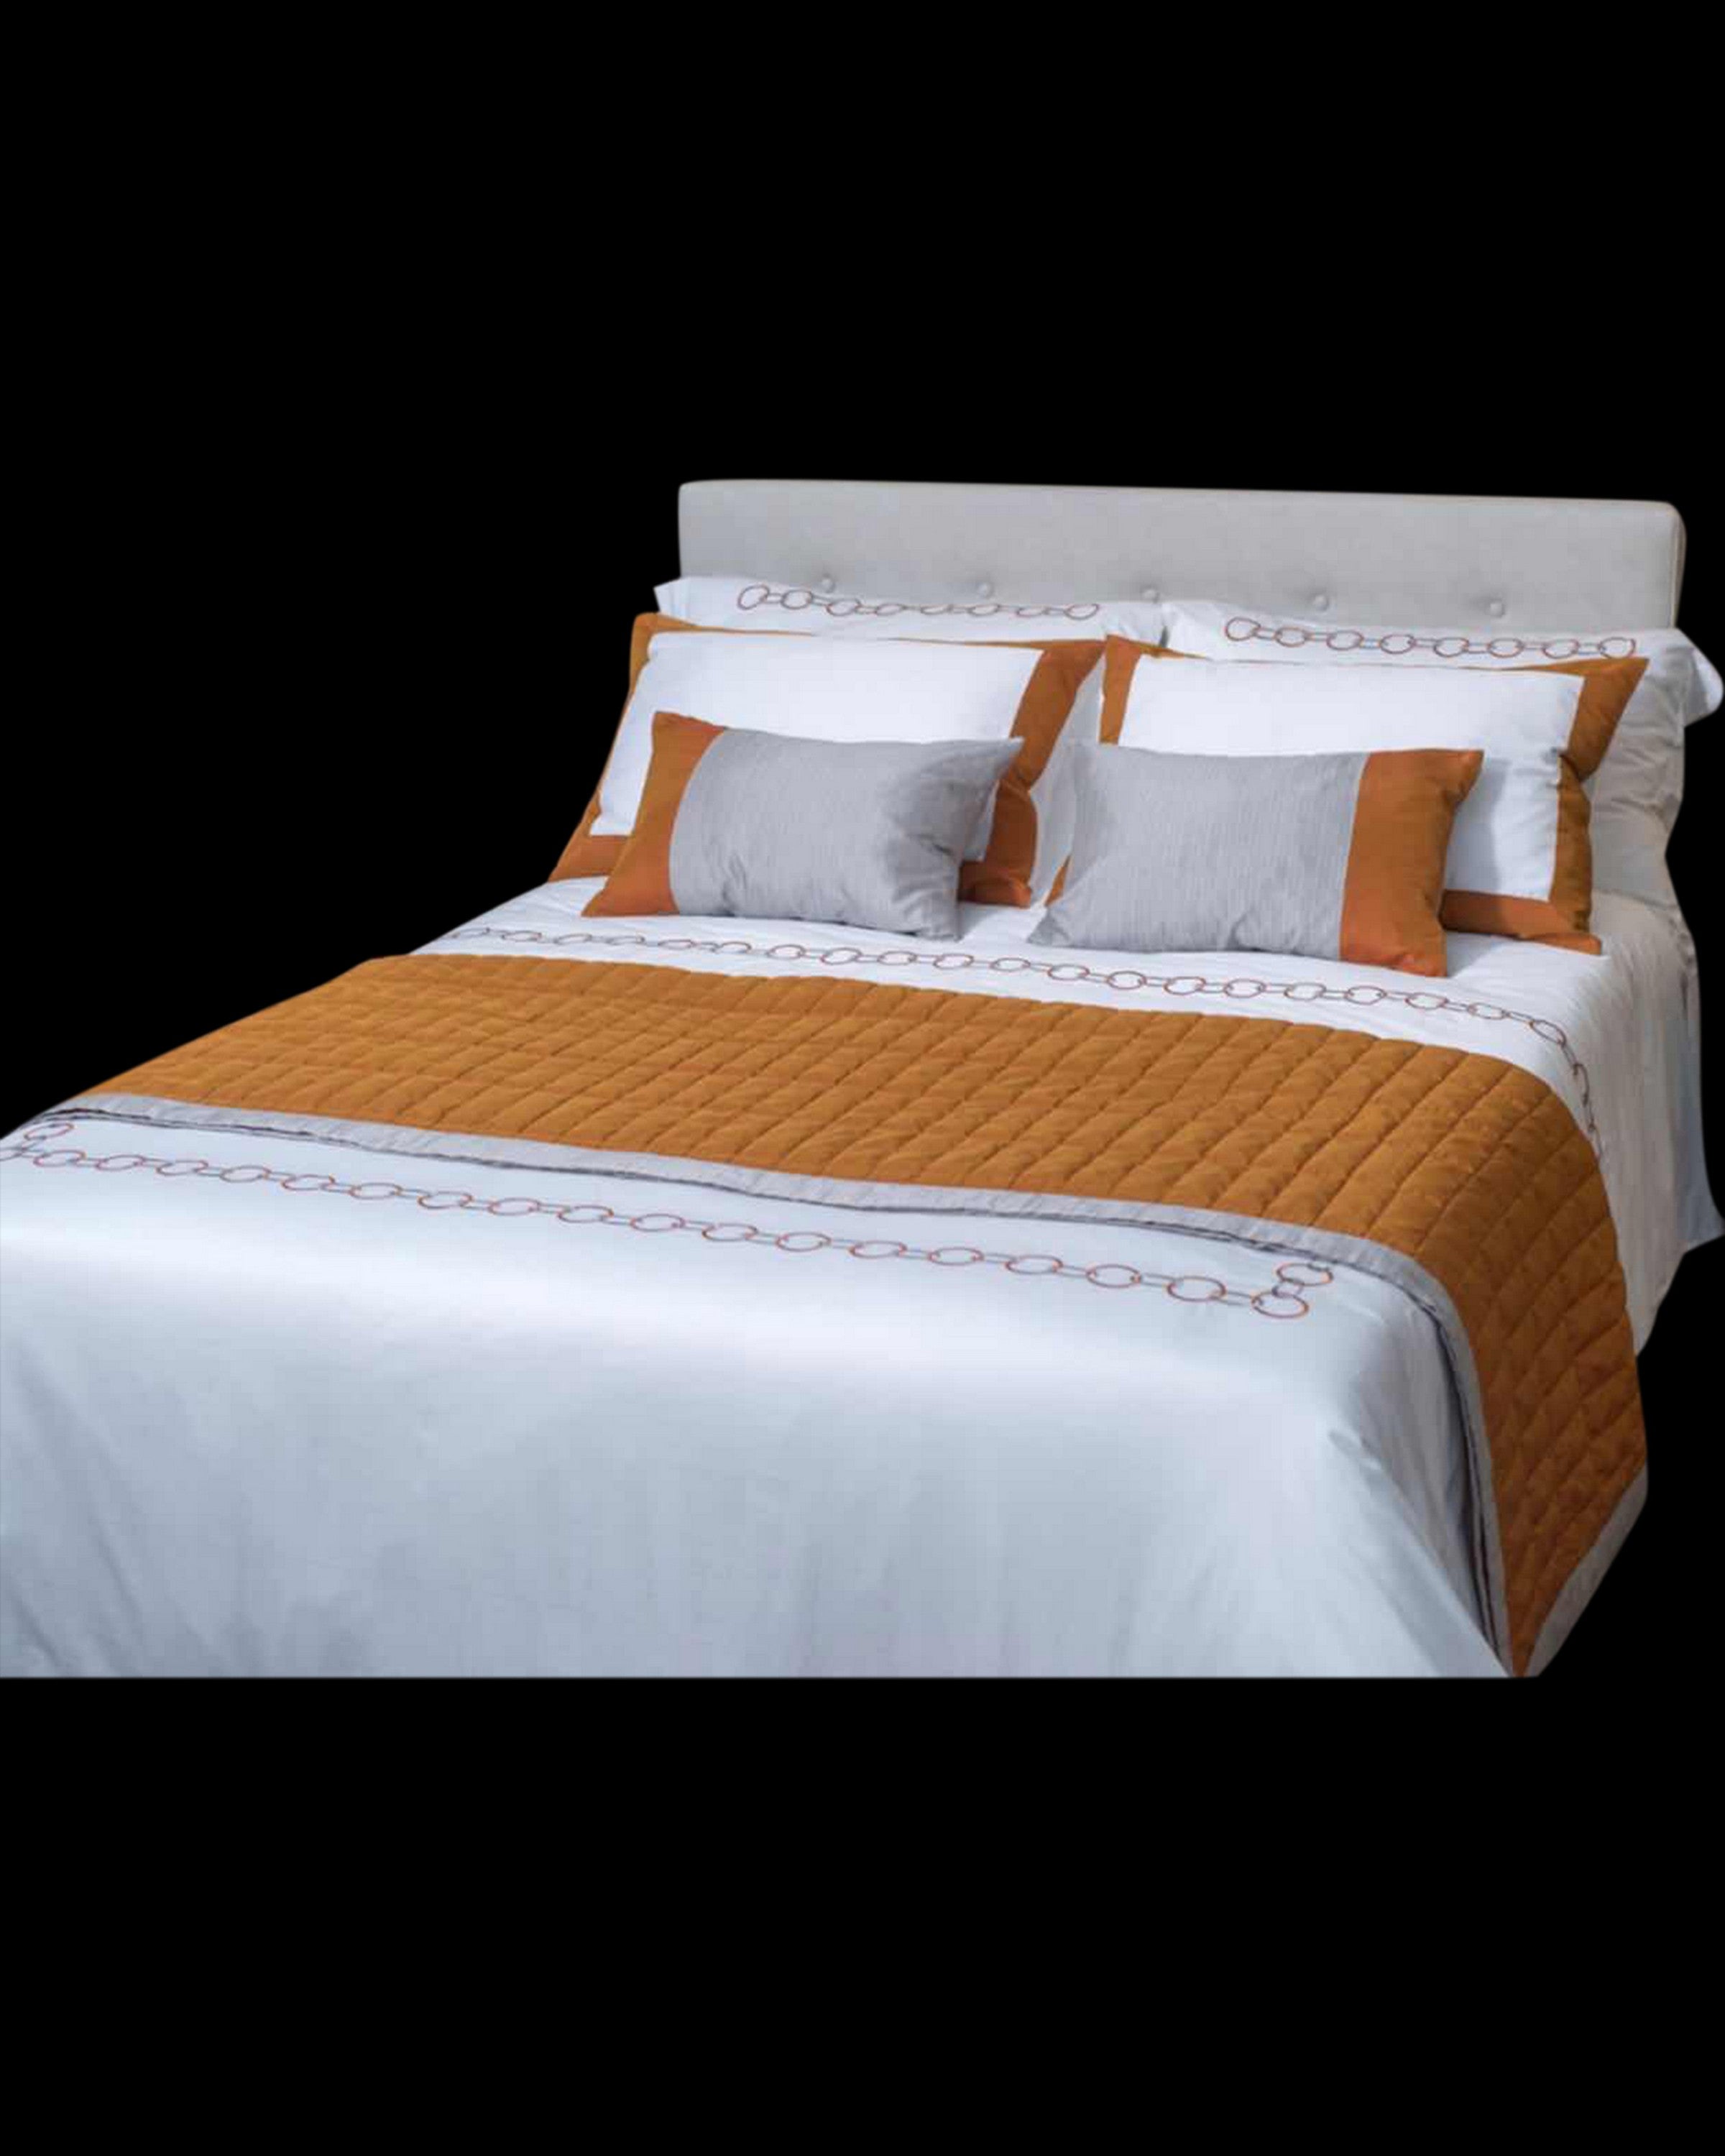 Luxury orange bed set with pillow